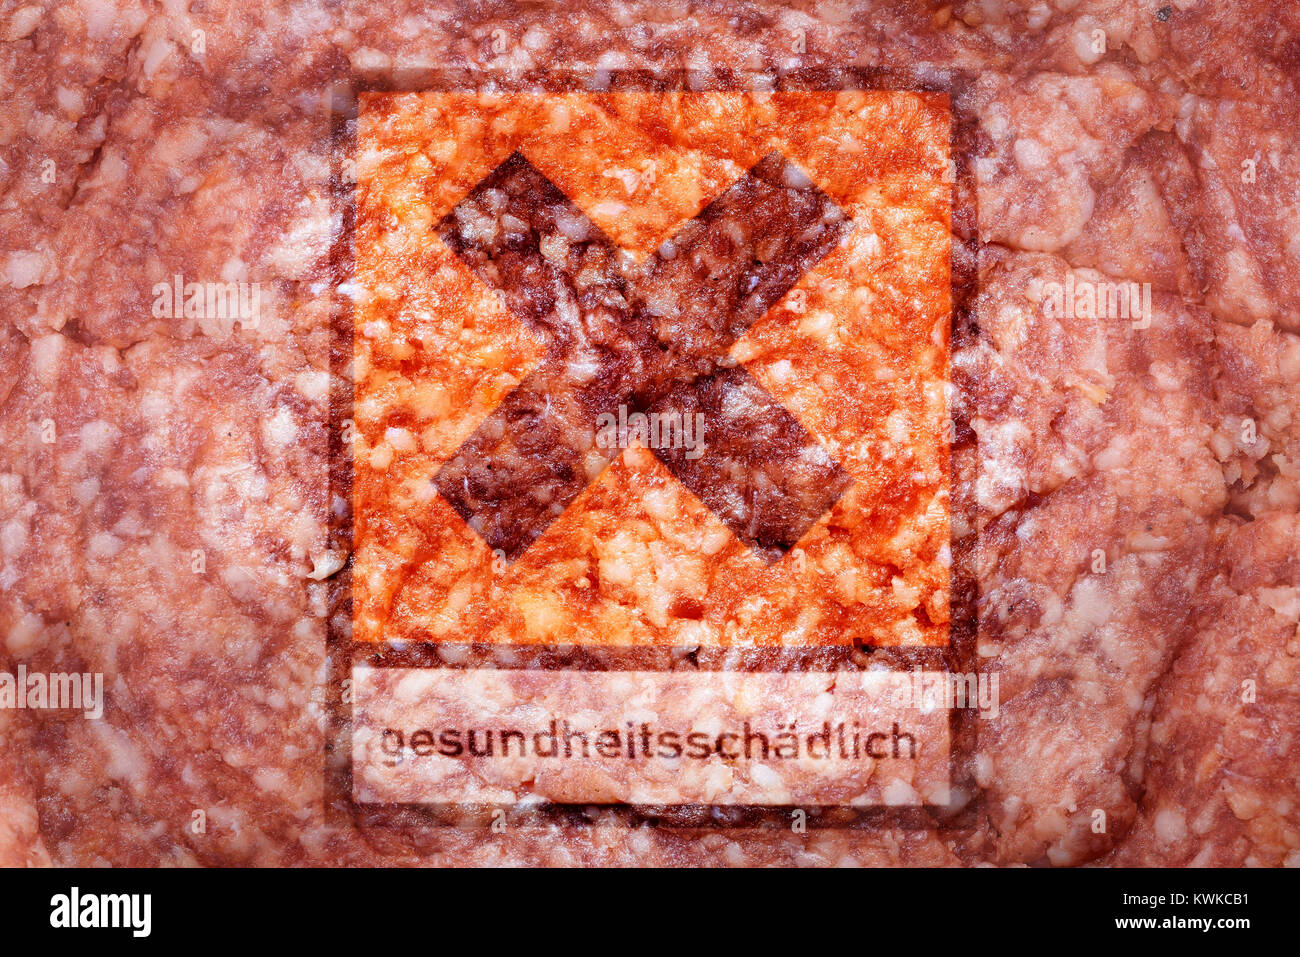 Sausage and warning label, WHO classifies sausage as cancer-causing, Wurst und Warnlabel, WHO stuft Wurst als krebserregend ein Stock Photo